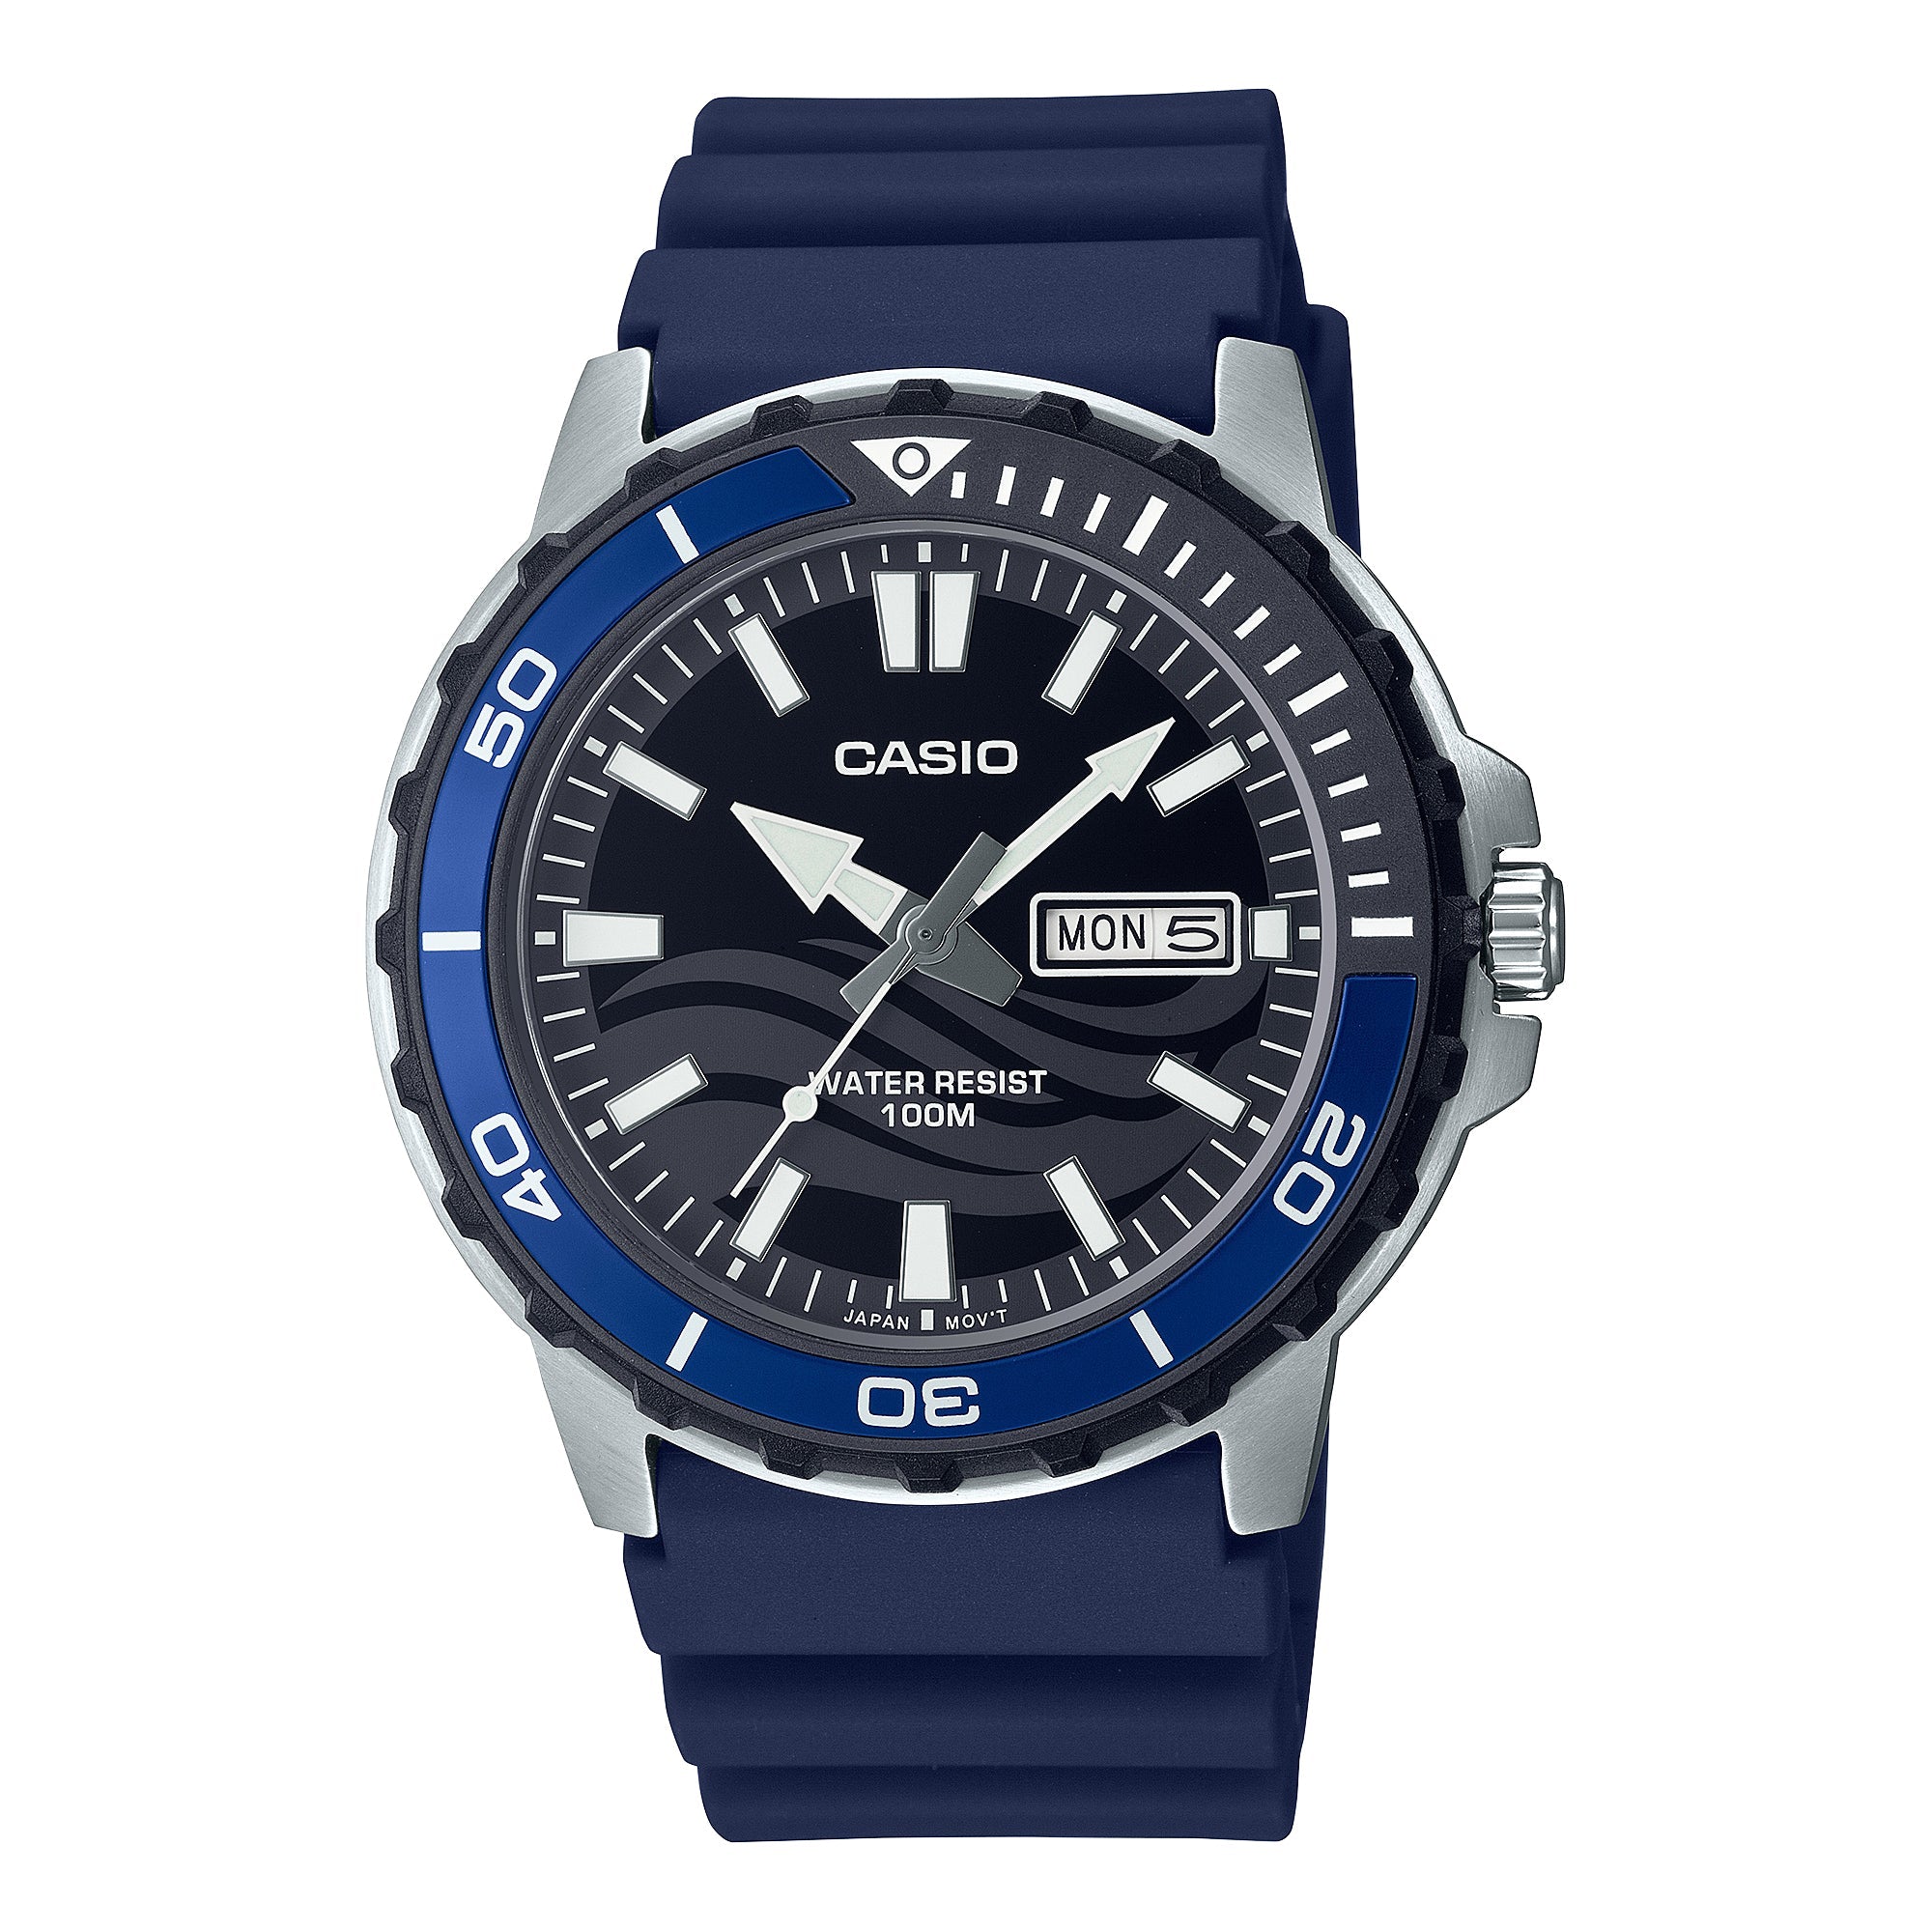 Casio Men's Analog Sporty Navy Blue Resin Band Watch MTD125-2A MTD-125-2A Watchspree